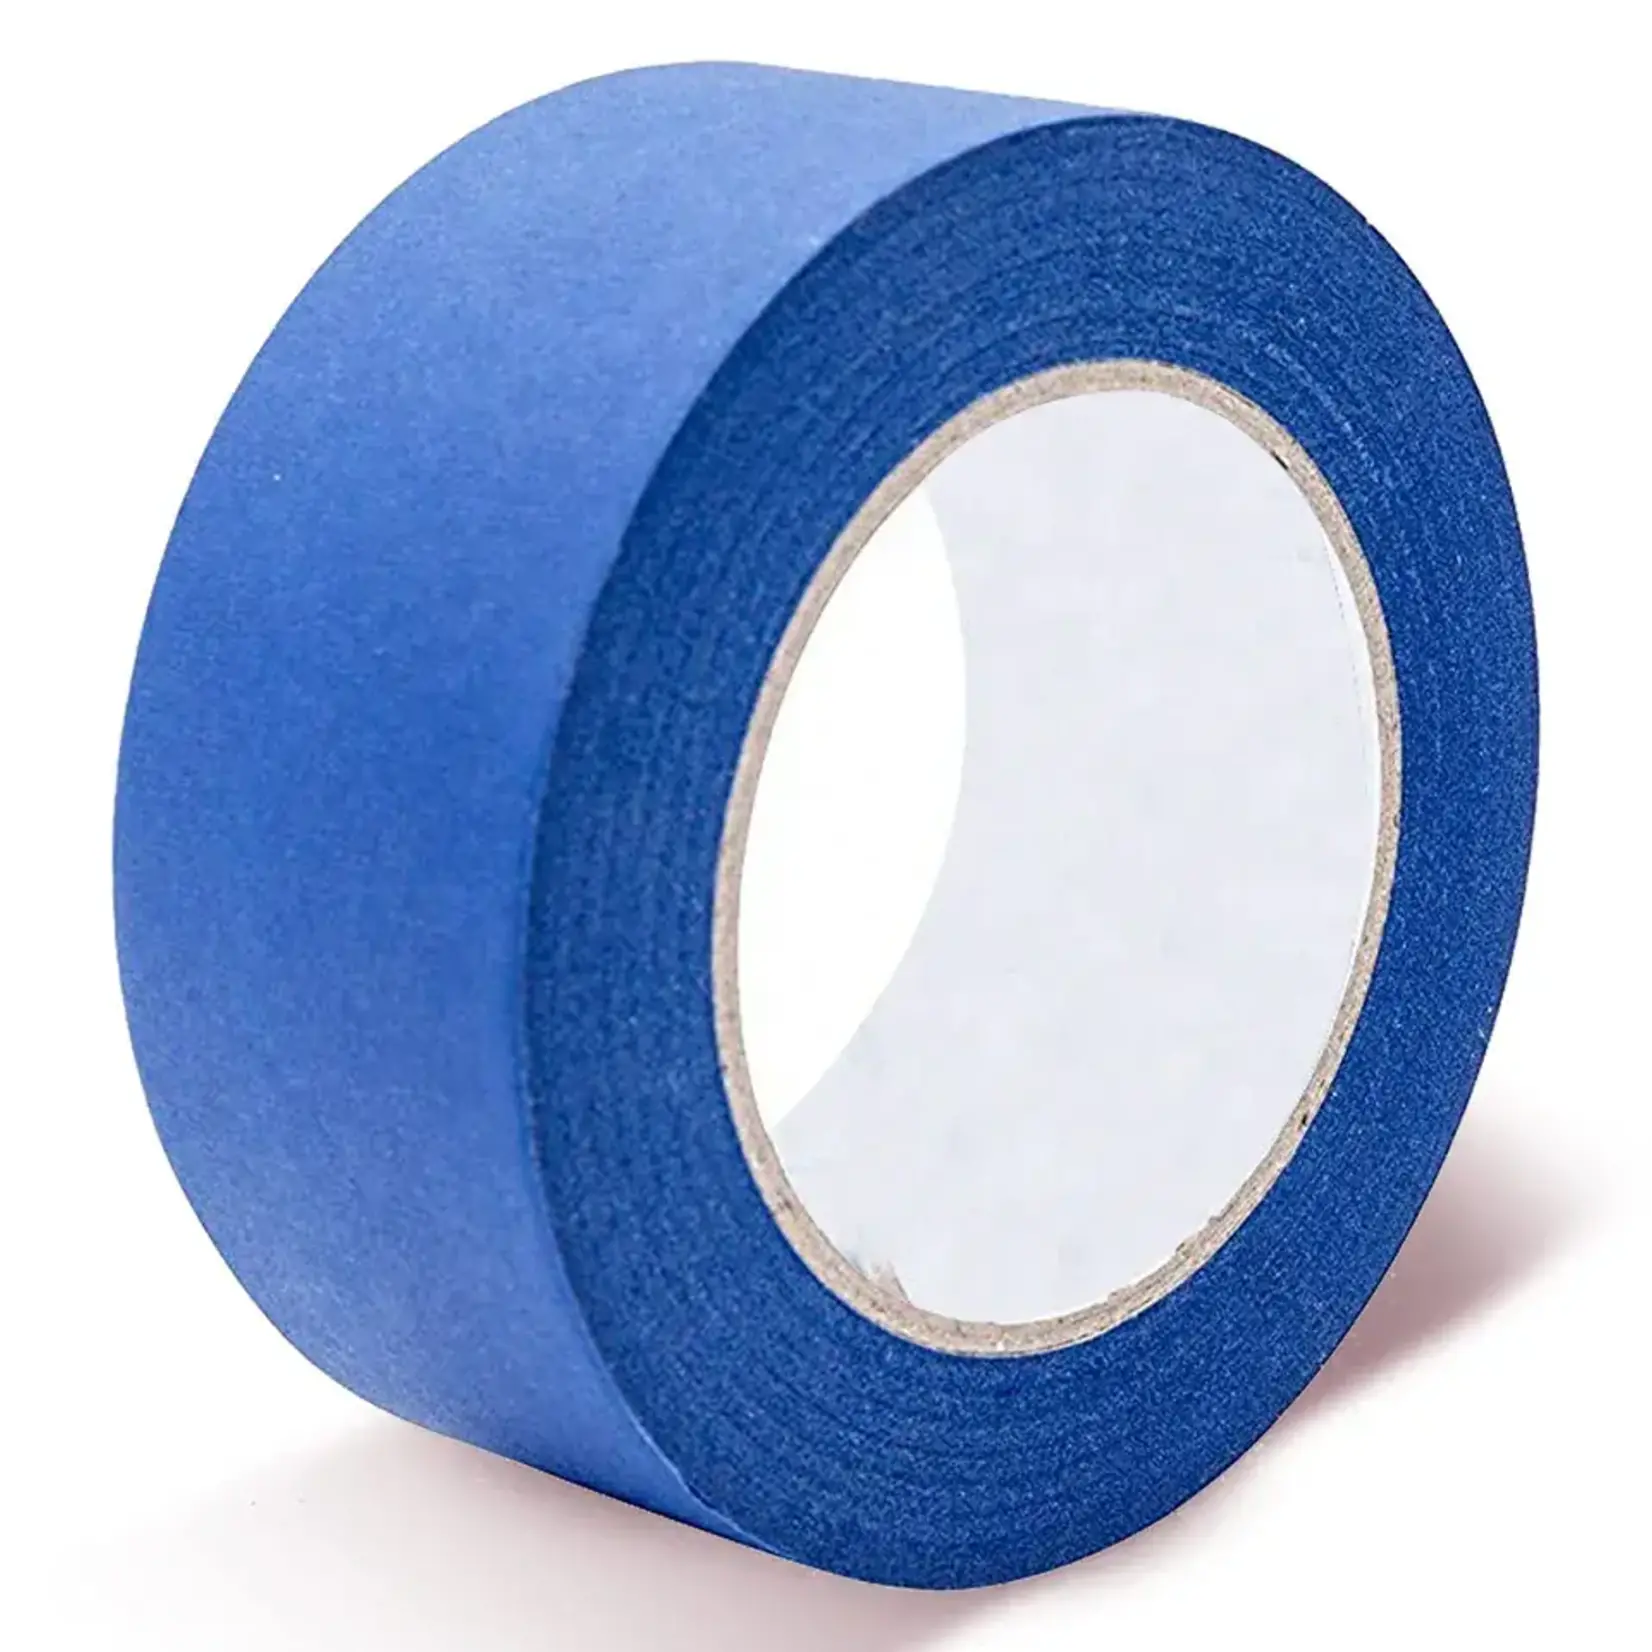 Dry It Center Dry It Center - 3" Blue Masking Tape (72MM x 55M)